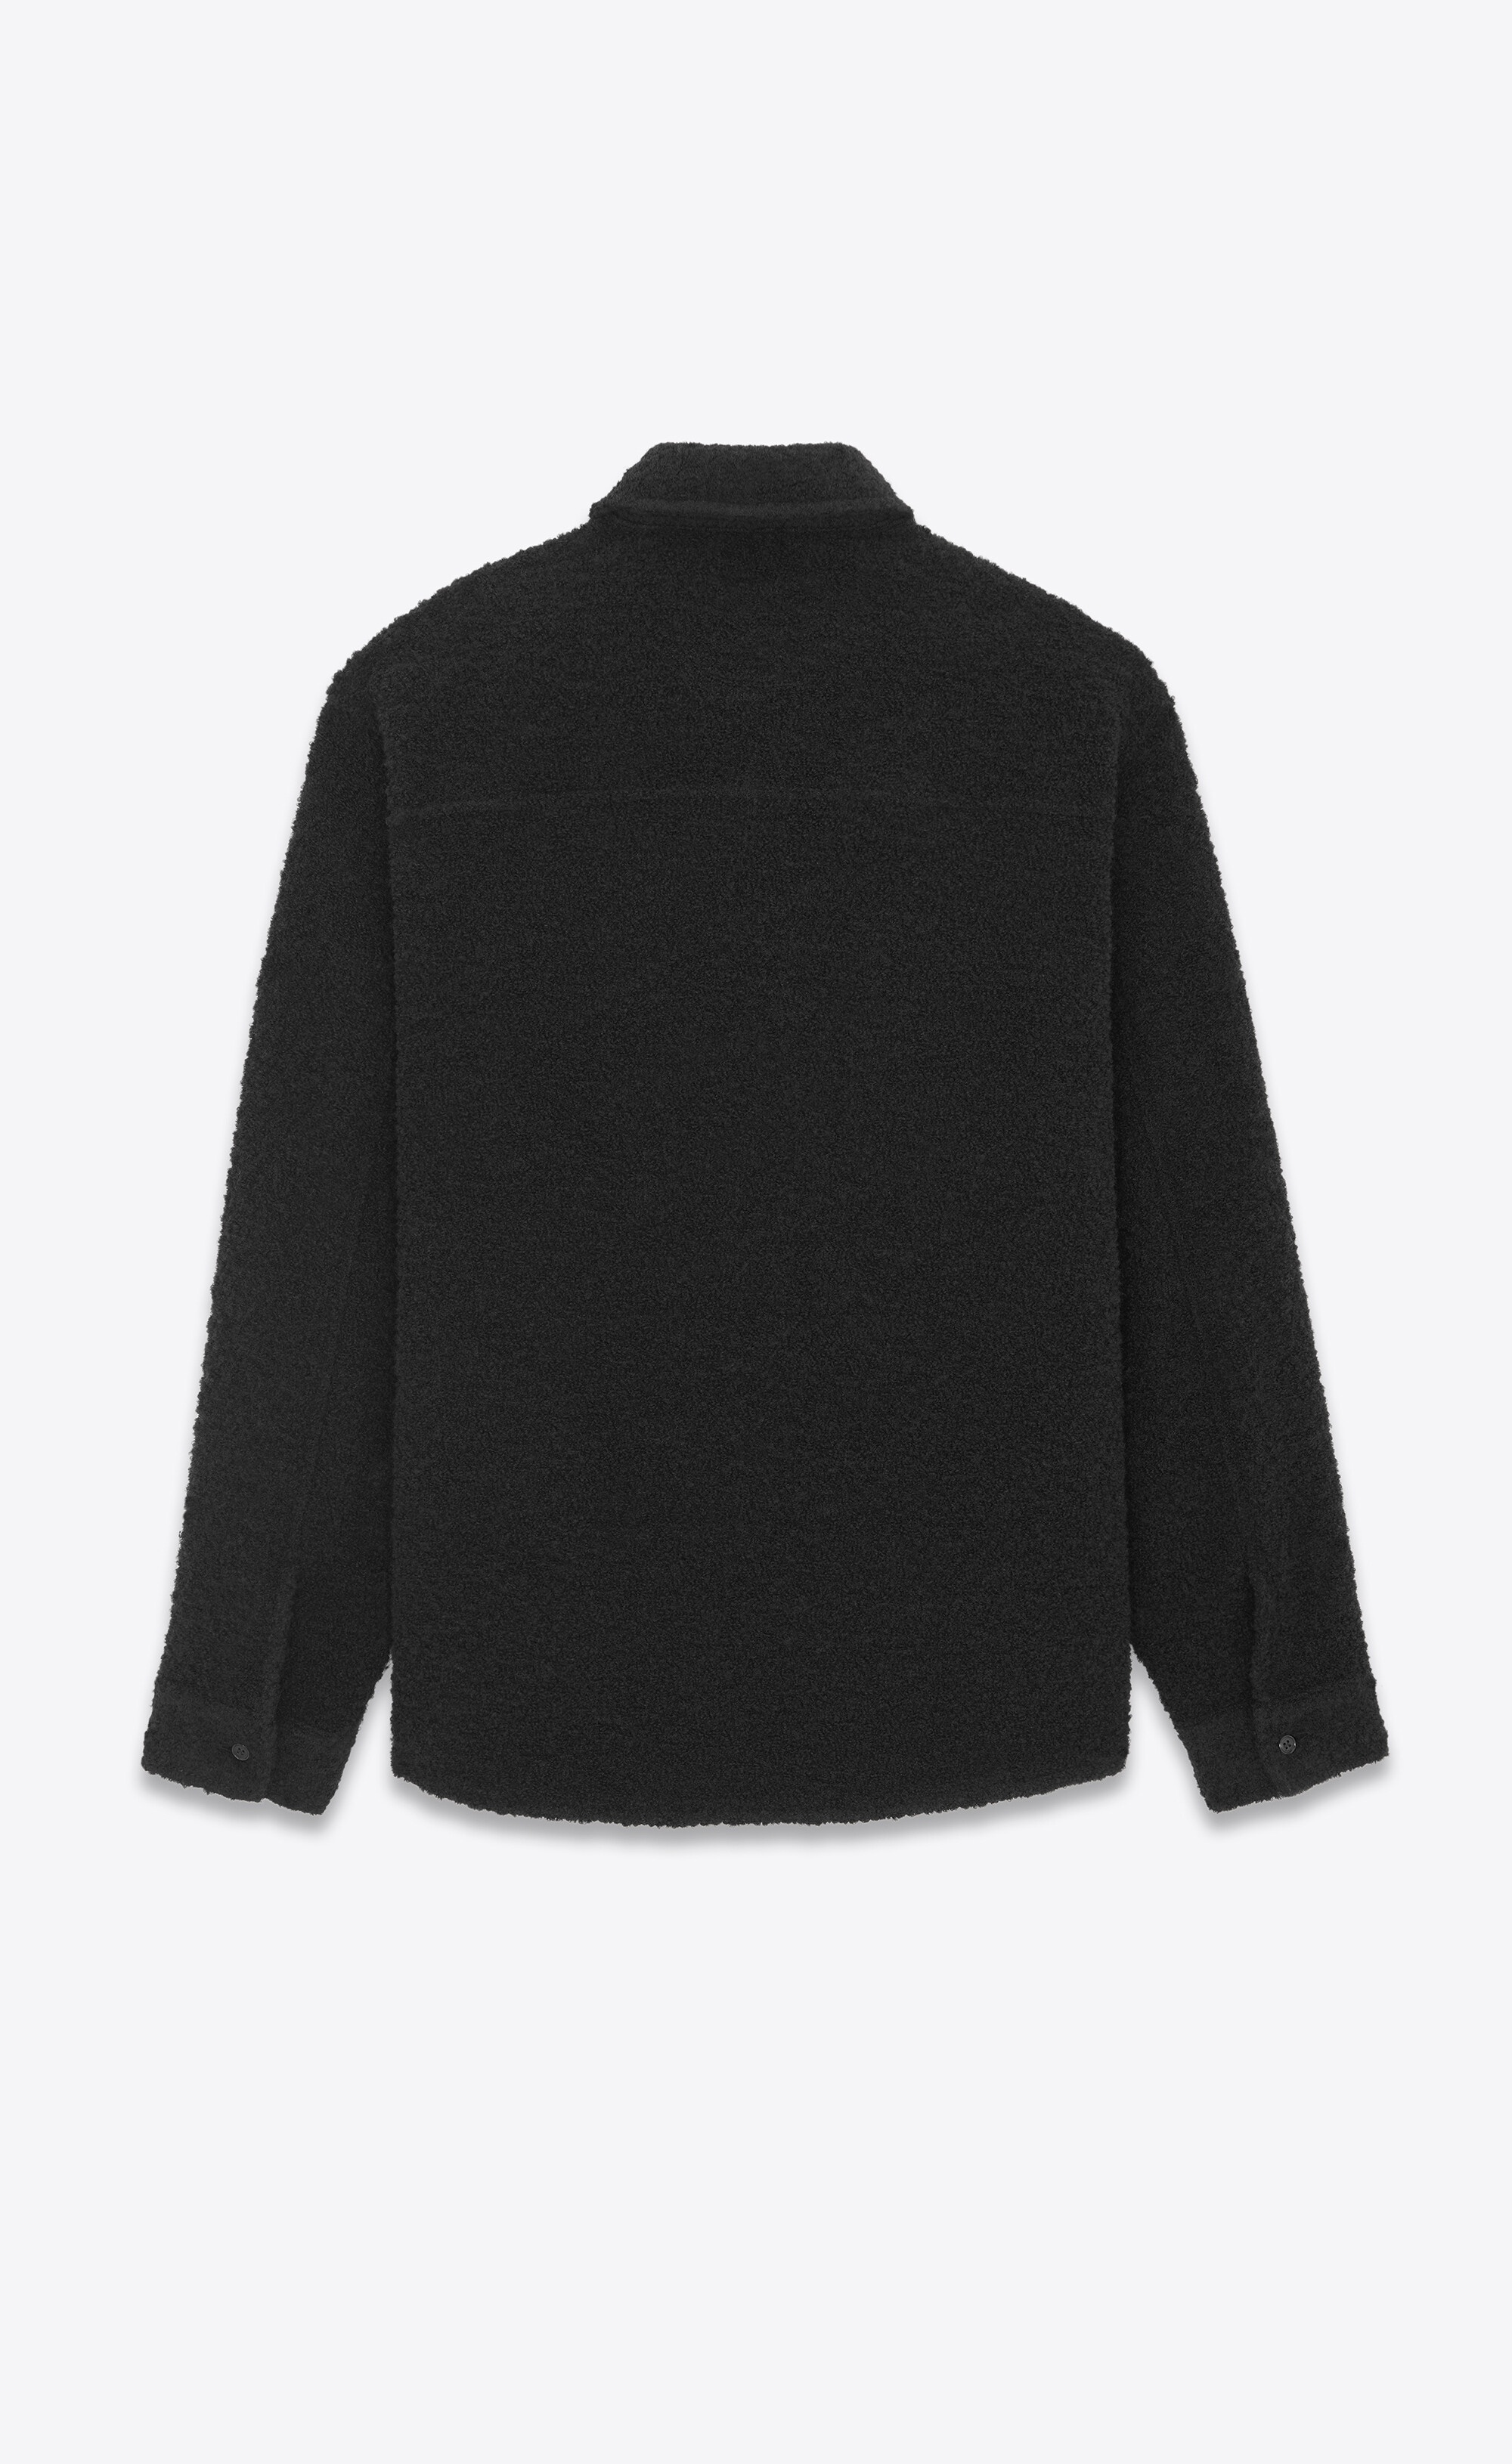 overshirt in raw black denim wool - 2